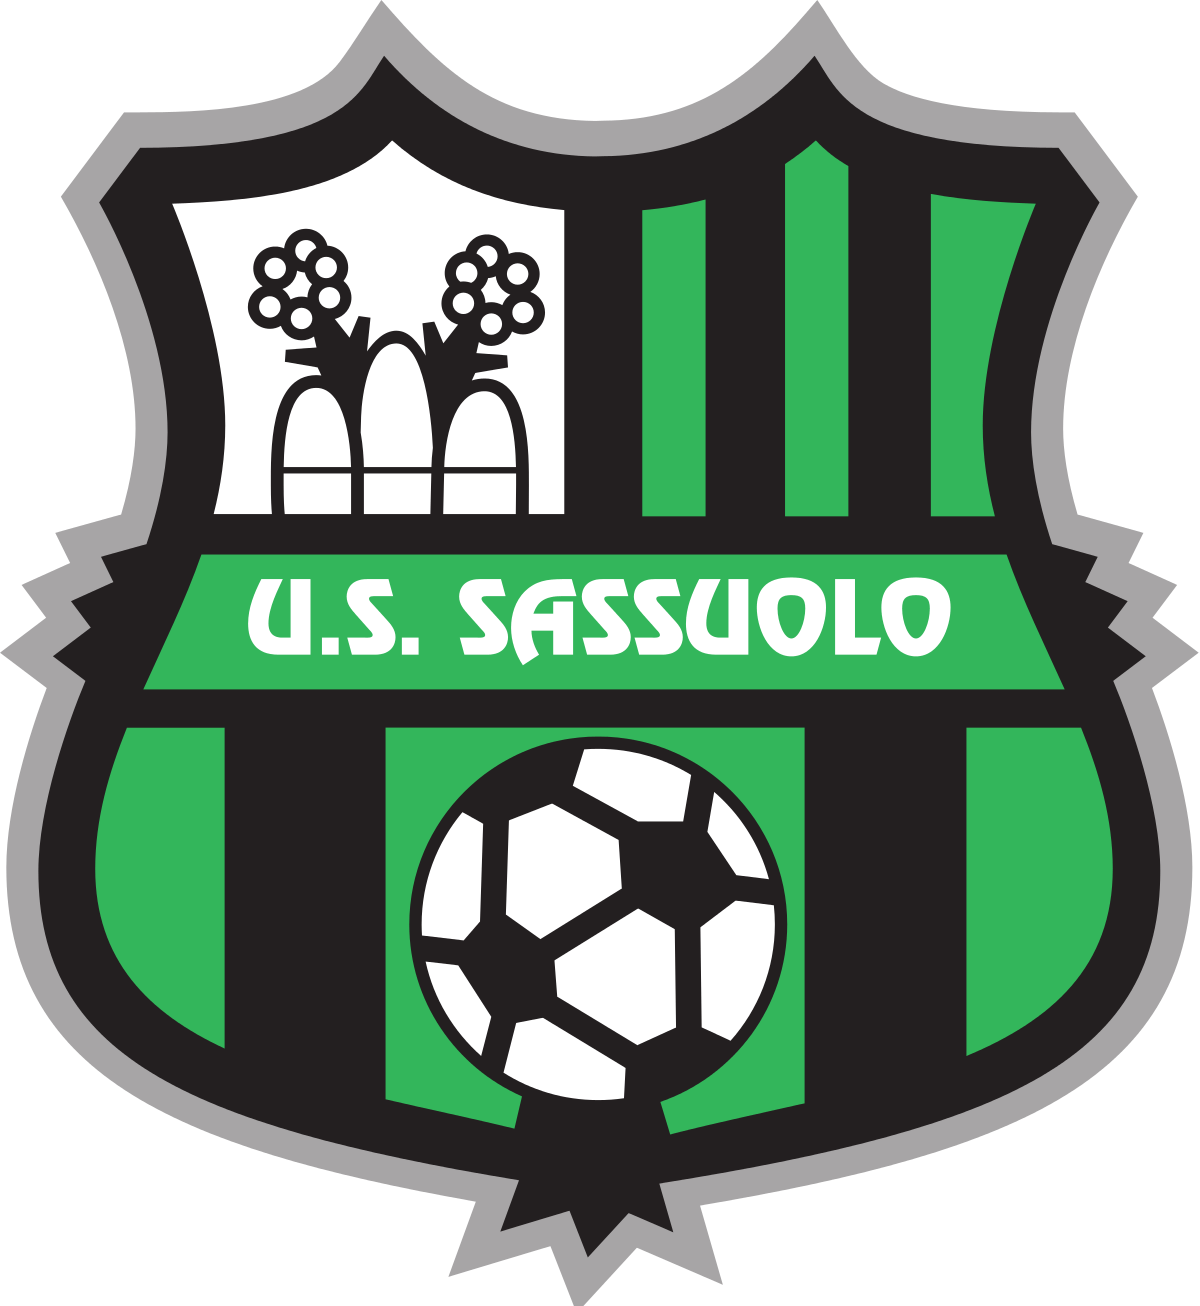 Green Football Logo - U.S. Sassuolo Calcio